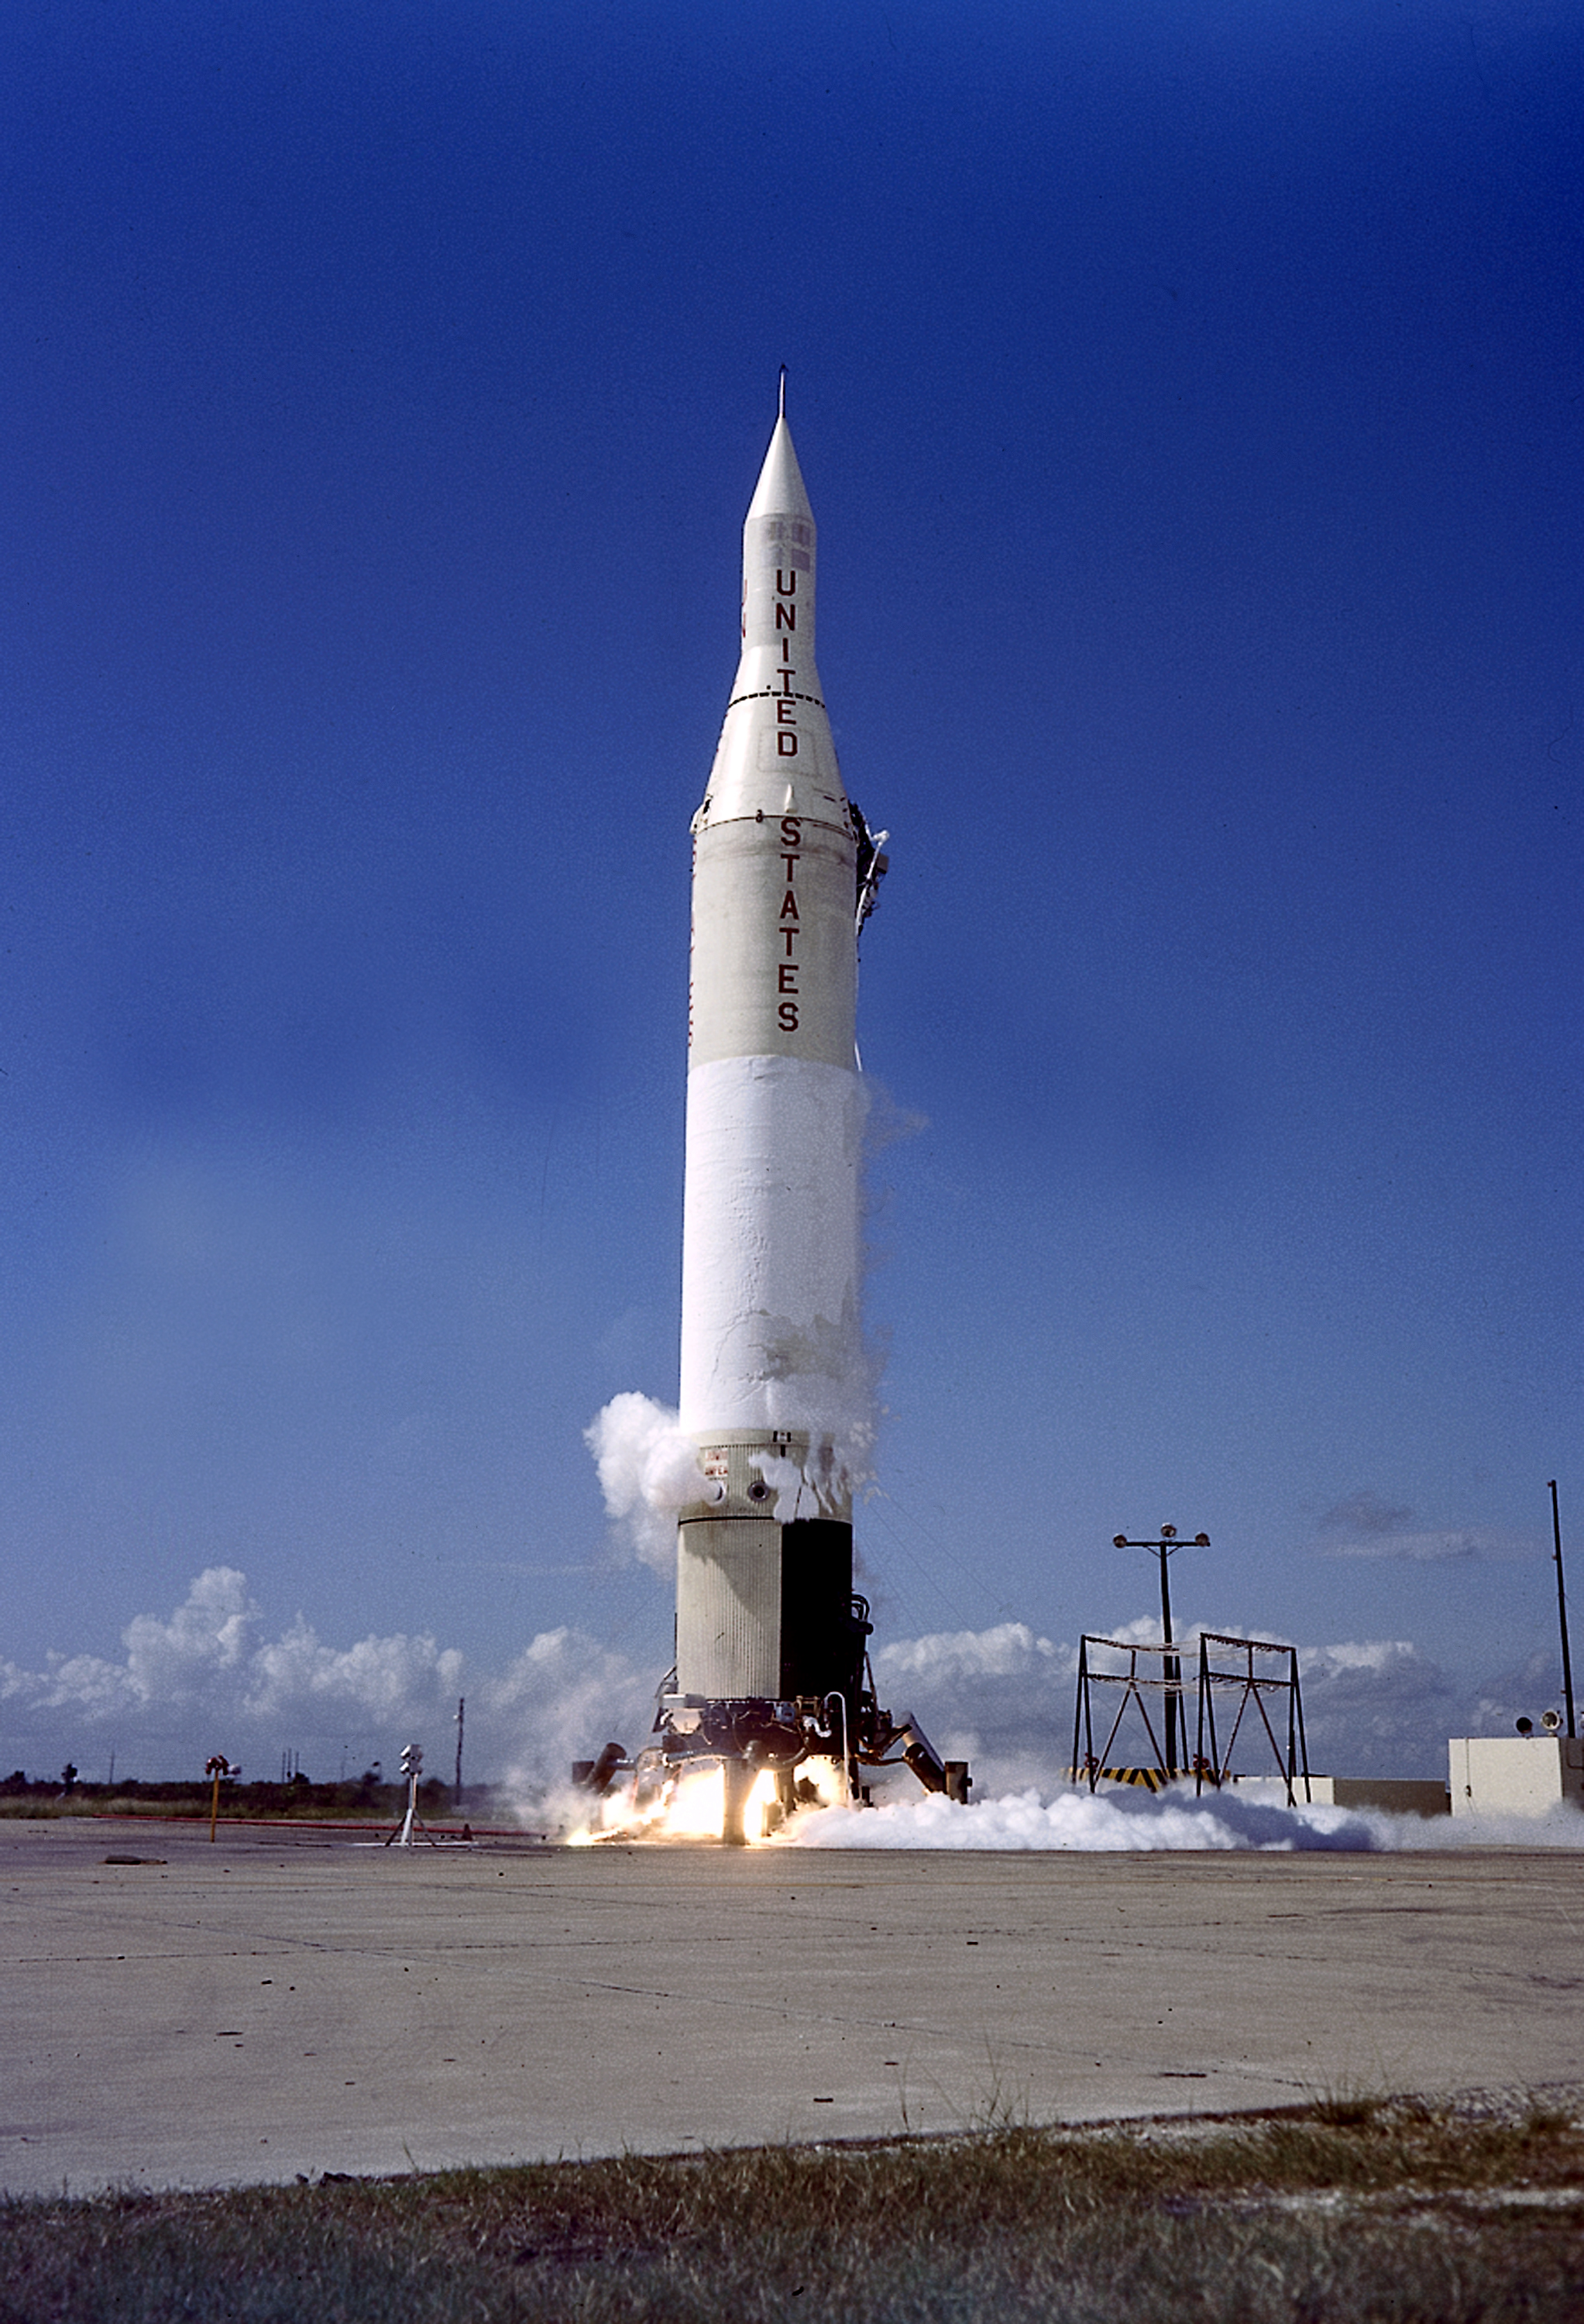 FileJuno II rocket.jpg Wikimedia Commons